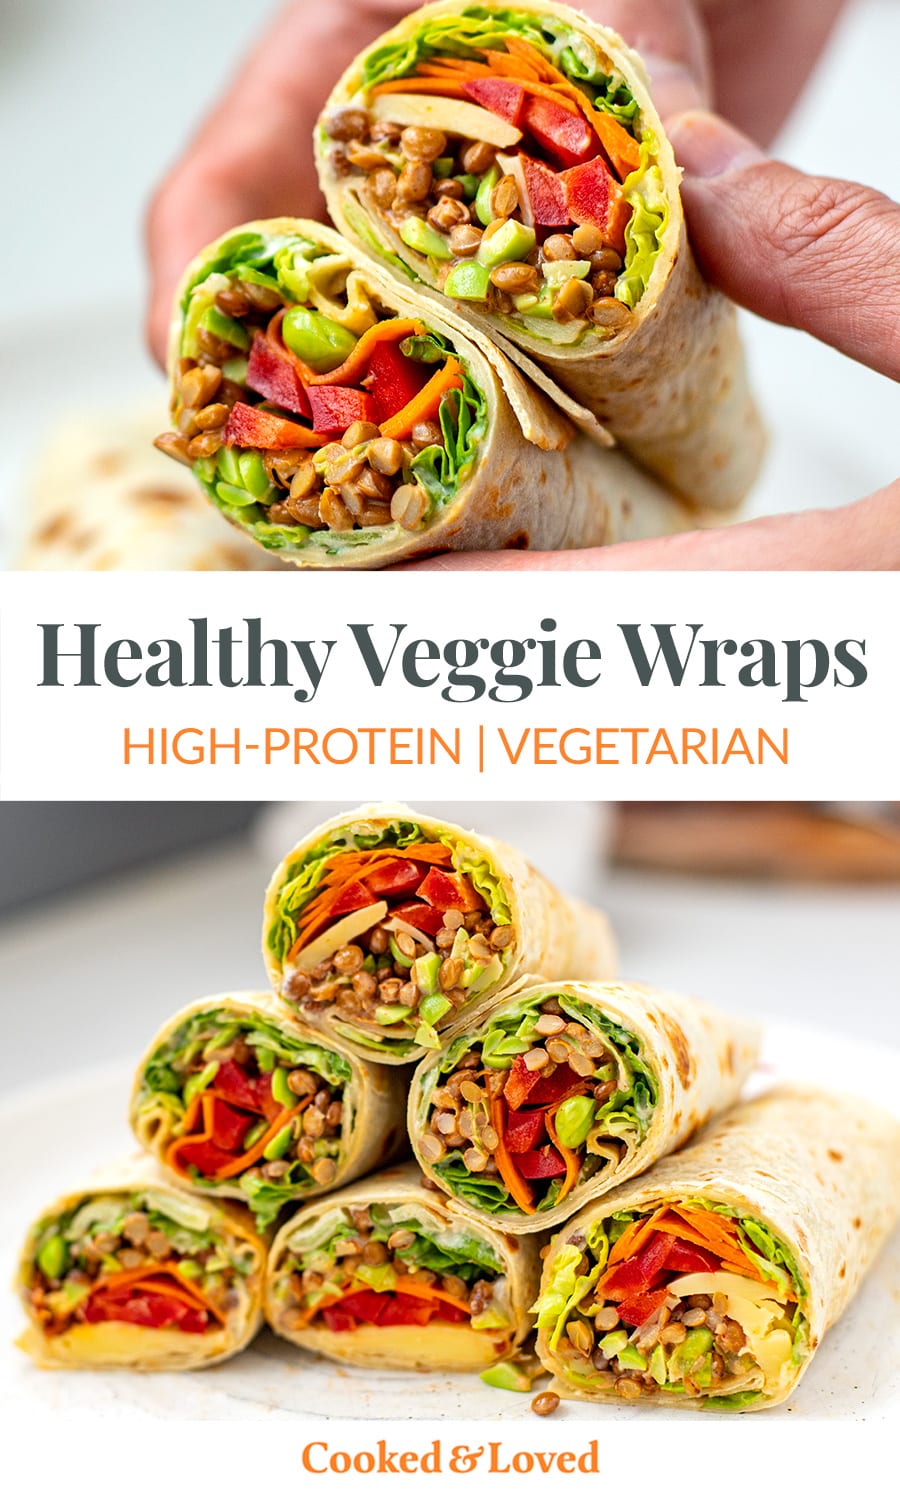 Healthy Veggie Wrap Recipe